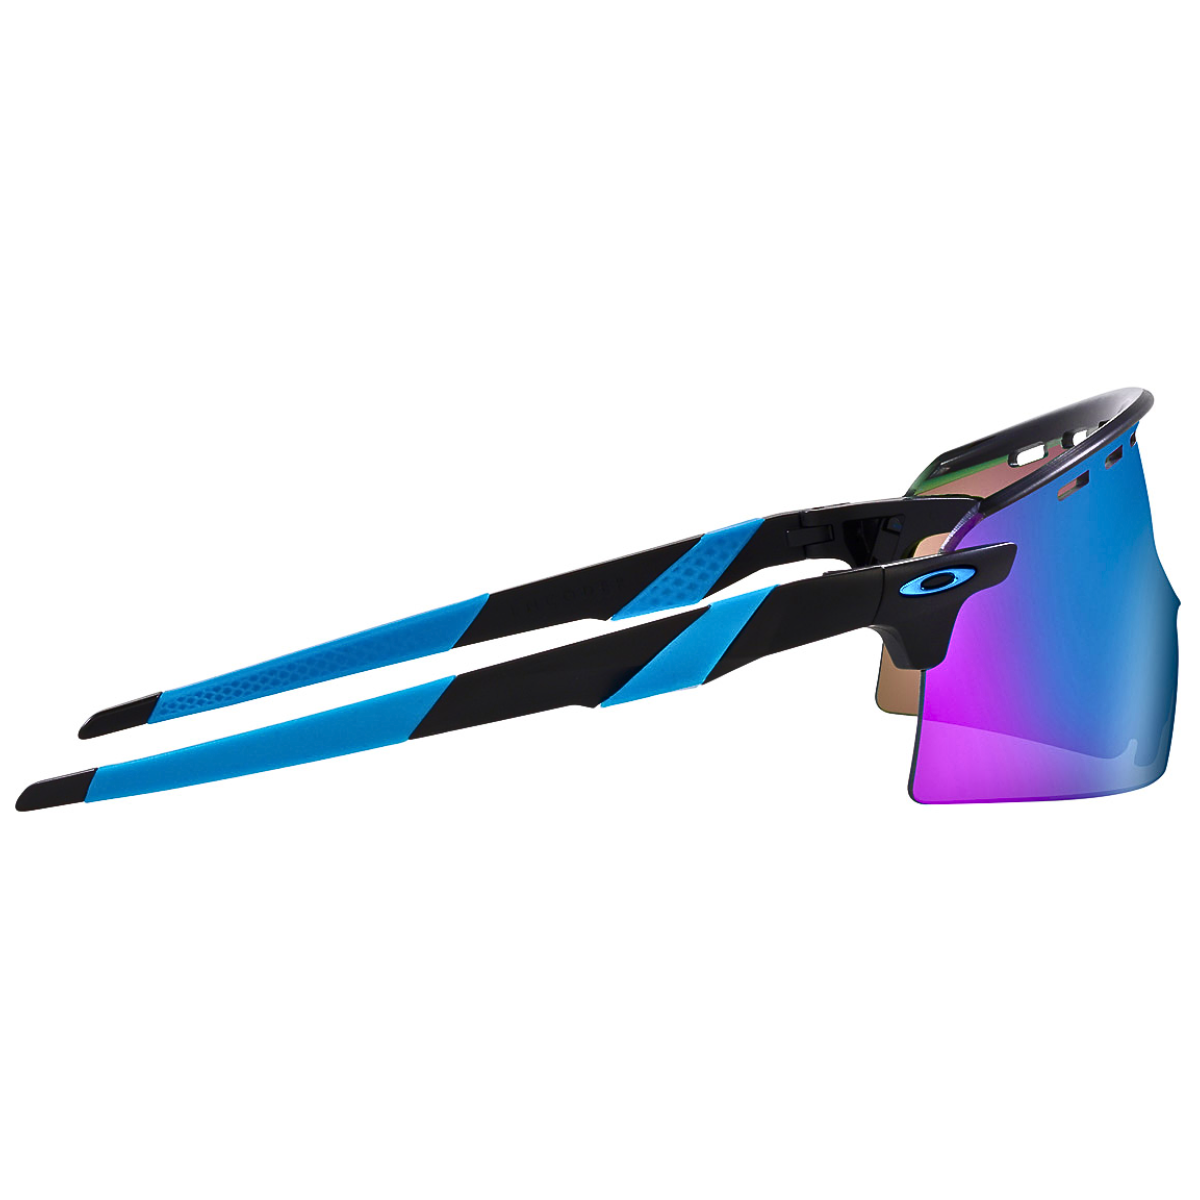 Oakley 0009235 Encoder Strike Vented Matte Black Prizm Sapphire Sunglasses - Only Prepaid Order